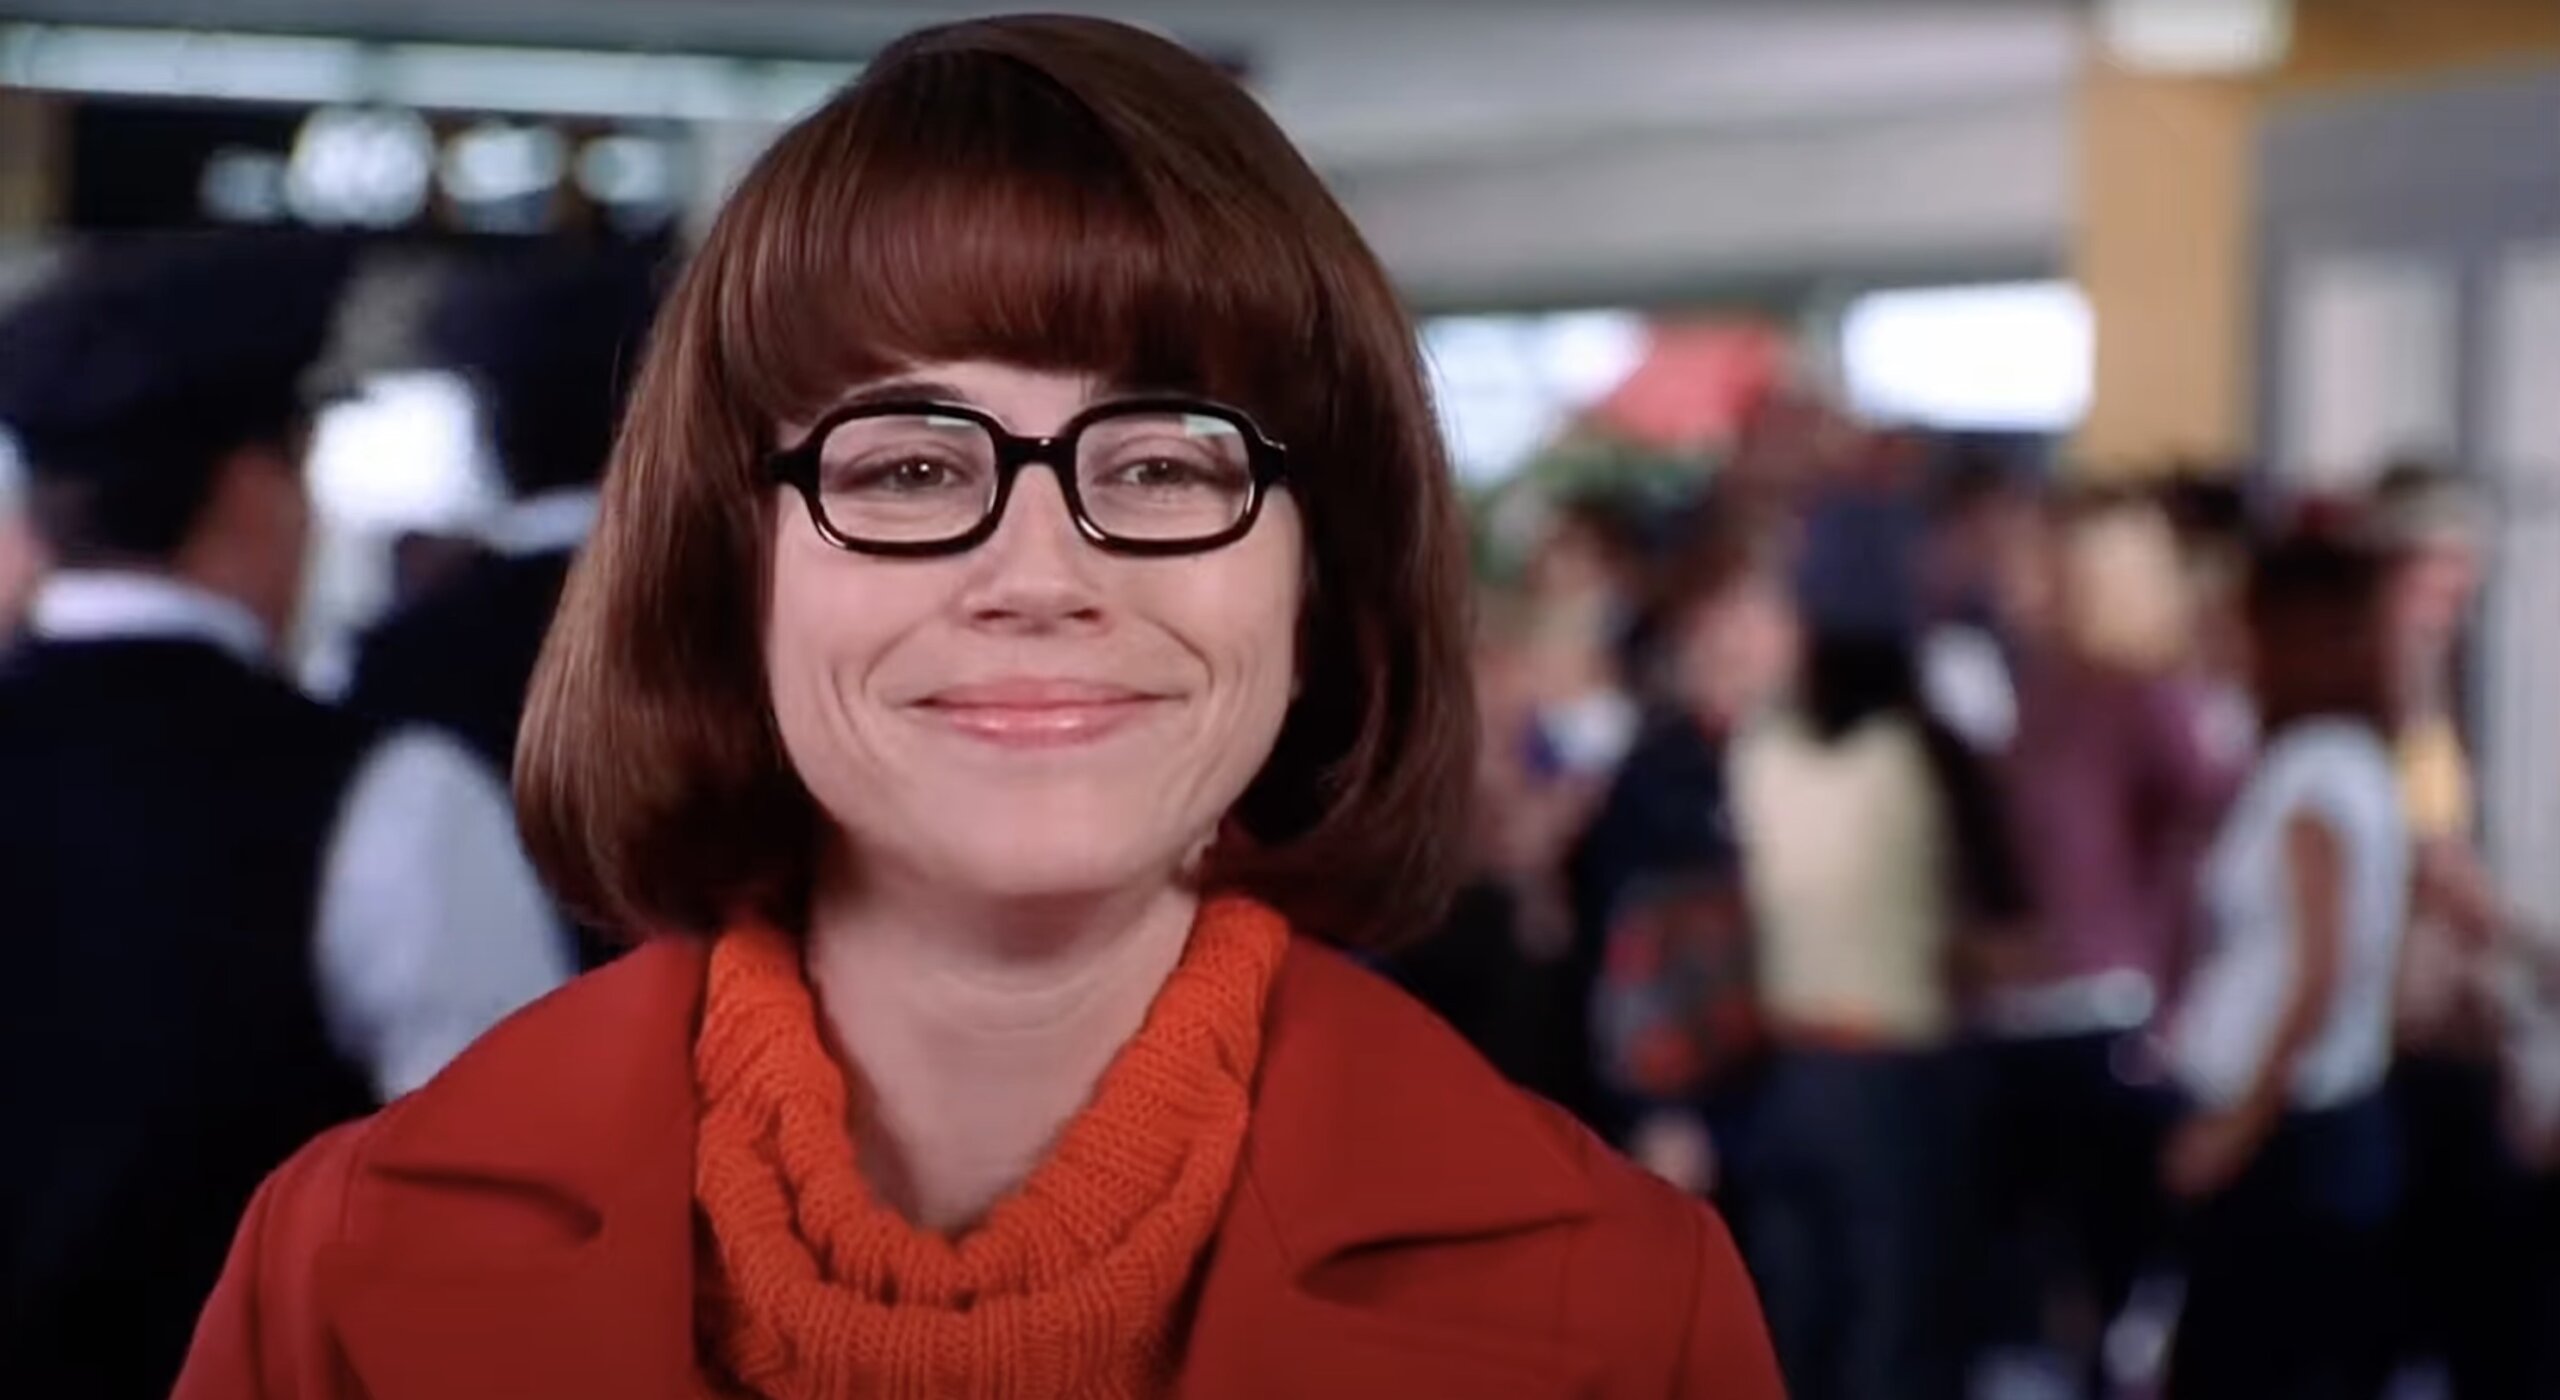 Scooby-Doo's 'Velma and Daphne' Get Live-Action Origin Movie